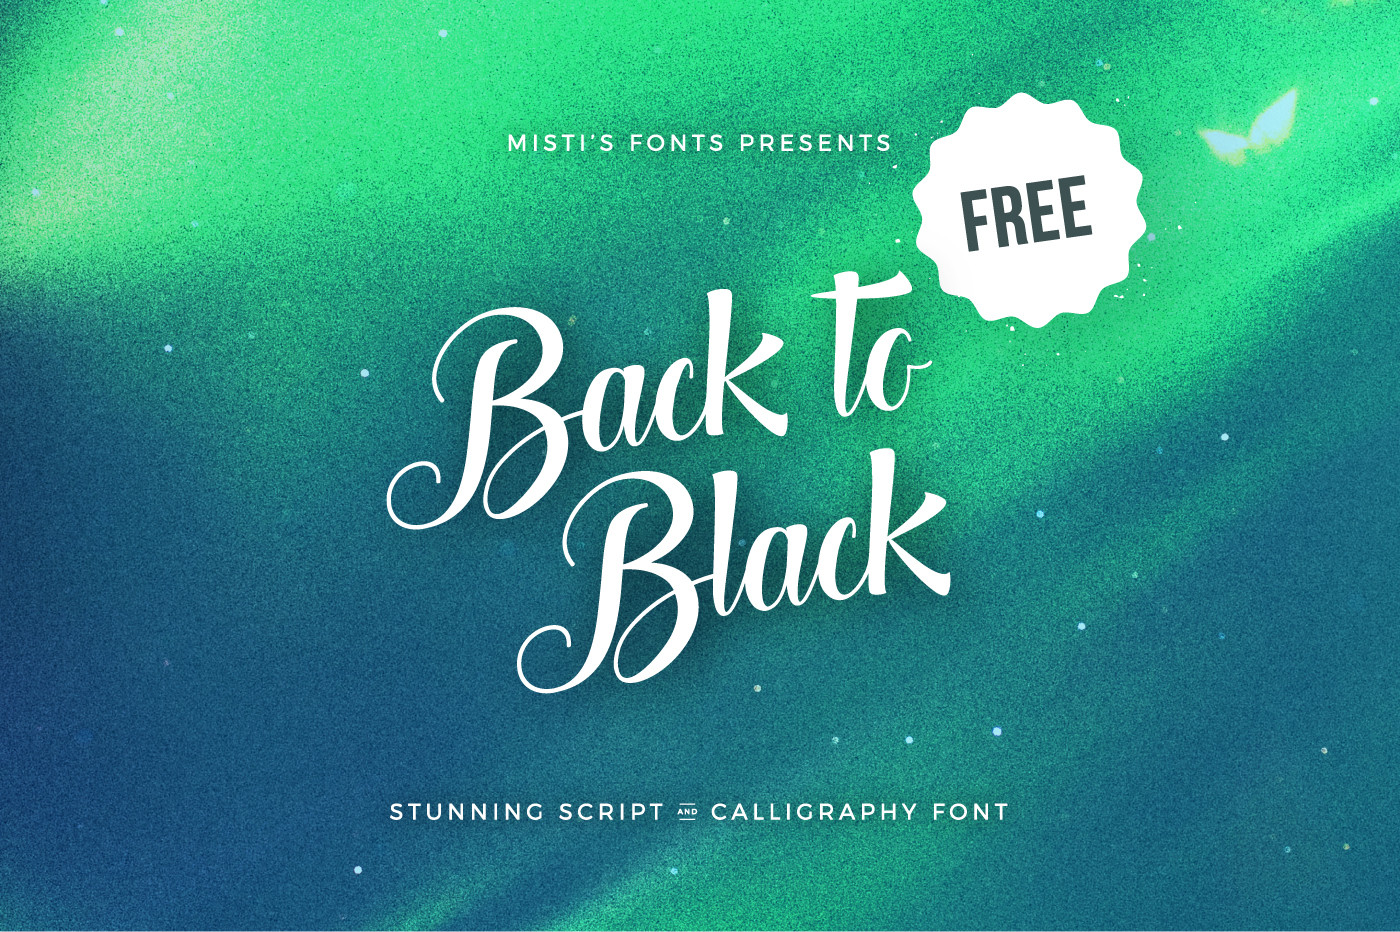 Back to Black Font Free